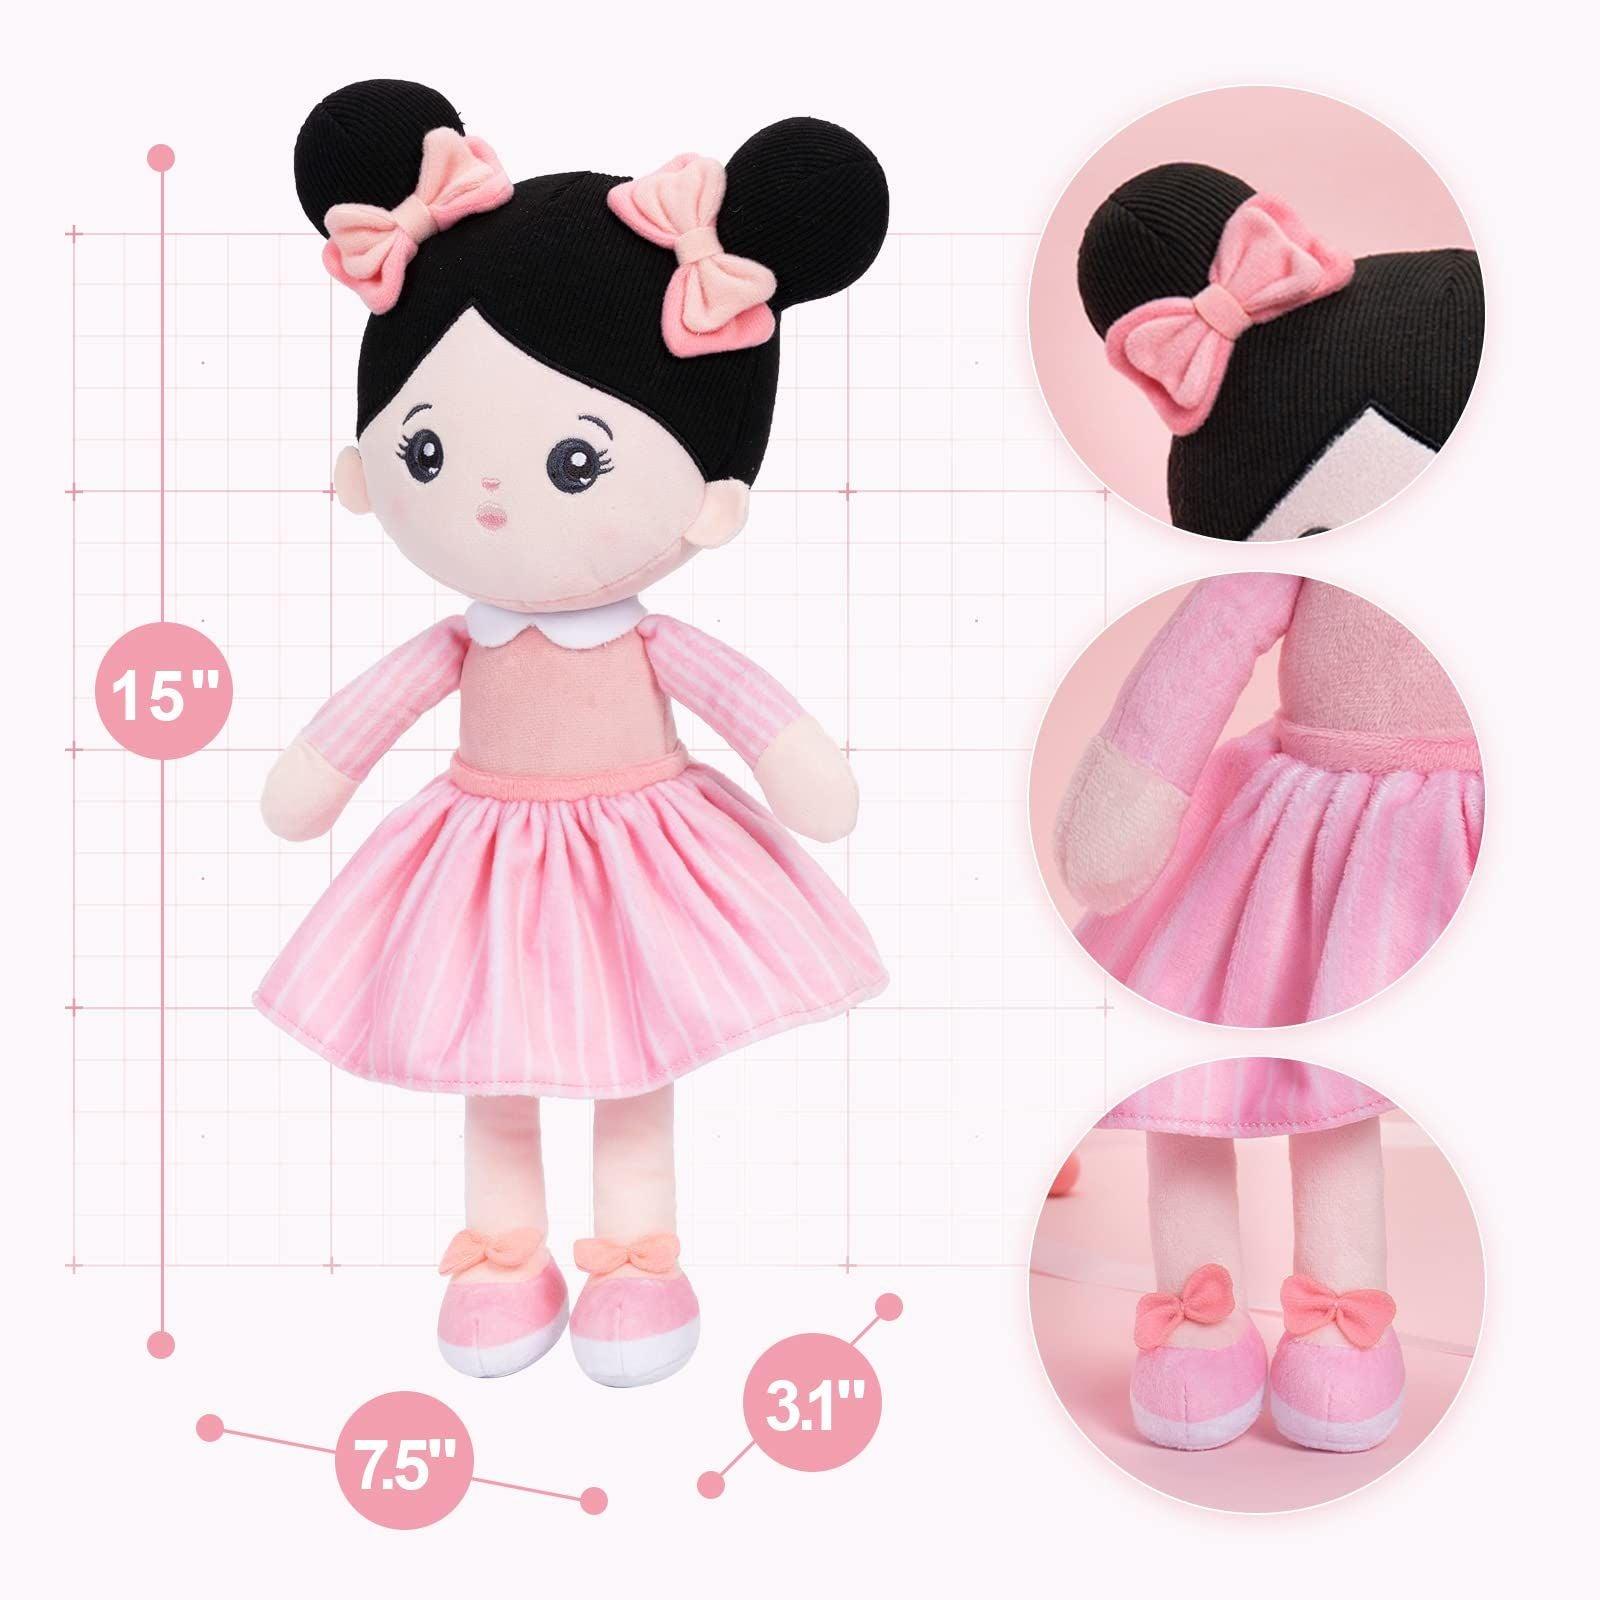 Starpony OUOZZZ 15'' Baby Dolls Girls Gifts Plush Soft Rag Toy for 1 Year Old Kids 2